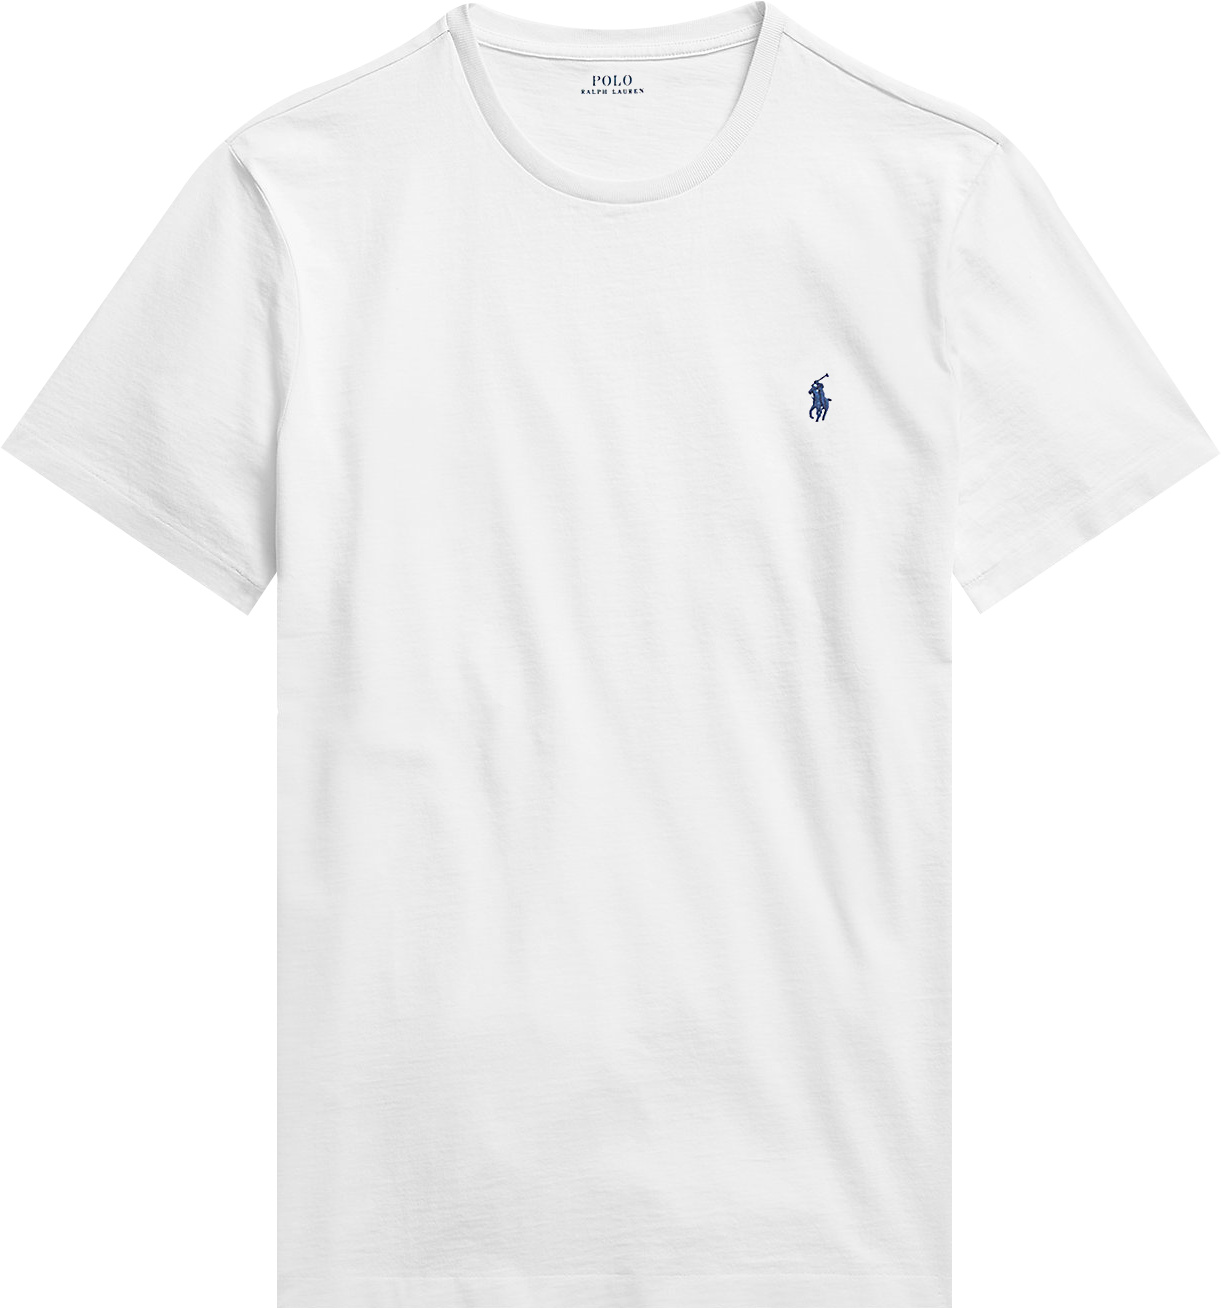 Polo Ralph Lauren White & Navy-Pony T-Shirt | INC STYLE